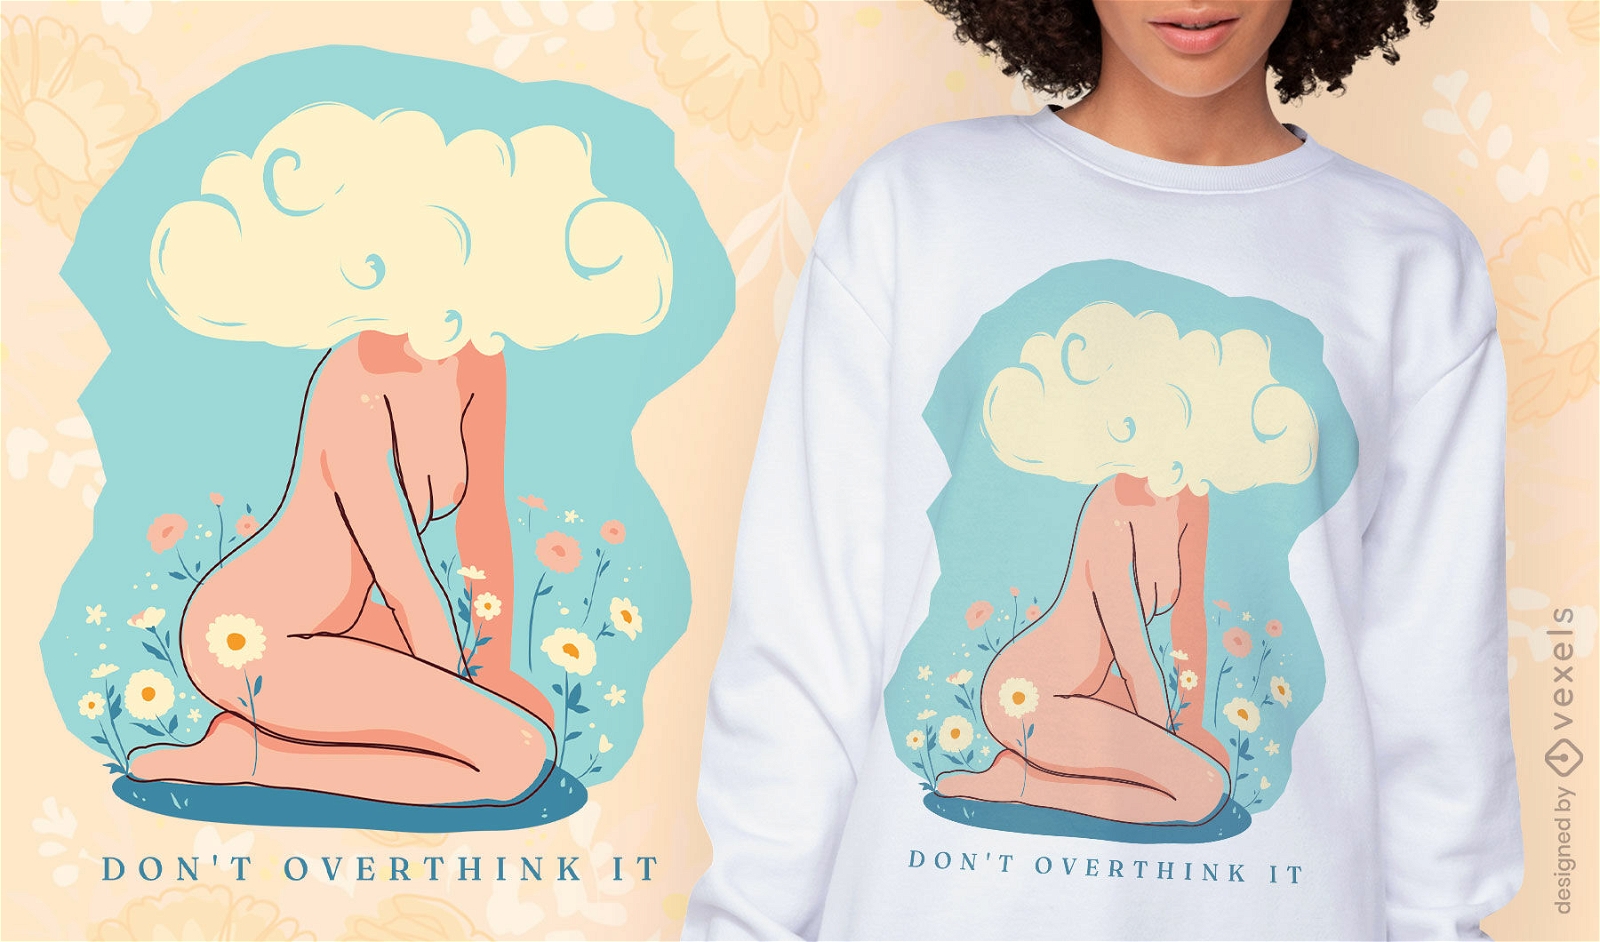 Overthinking cloud head t-shirt design